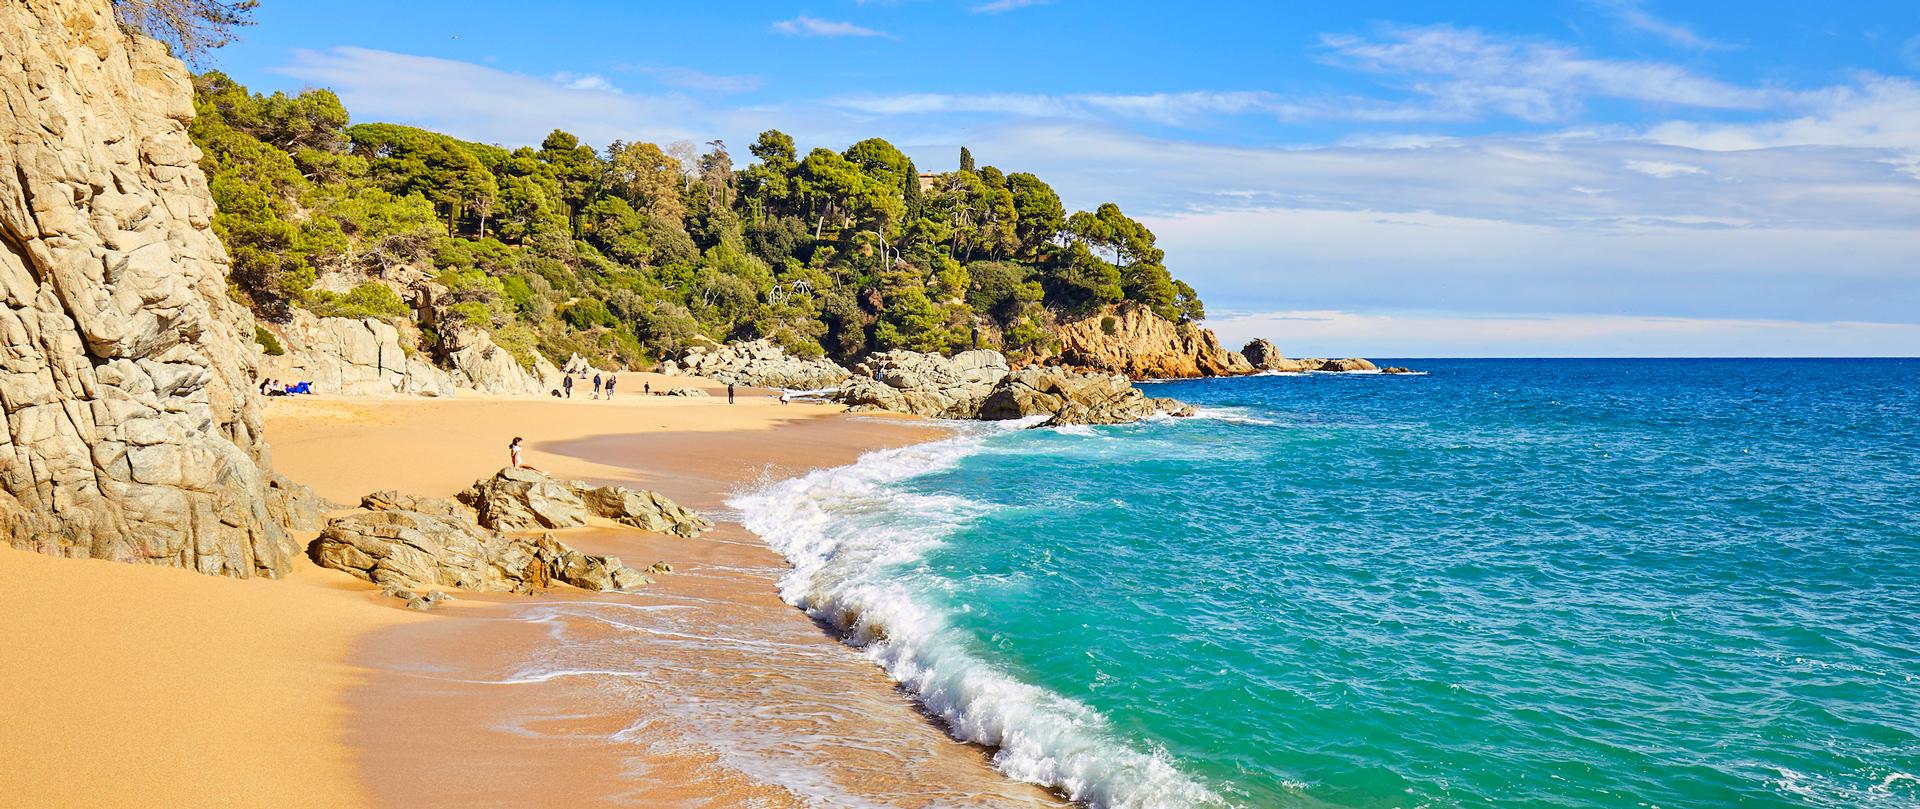 Discover the beaches of the Costa Brava, Girona